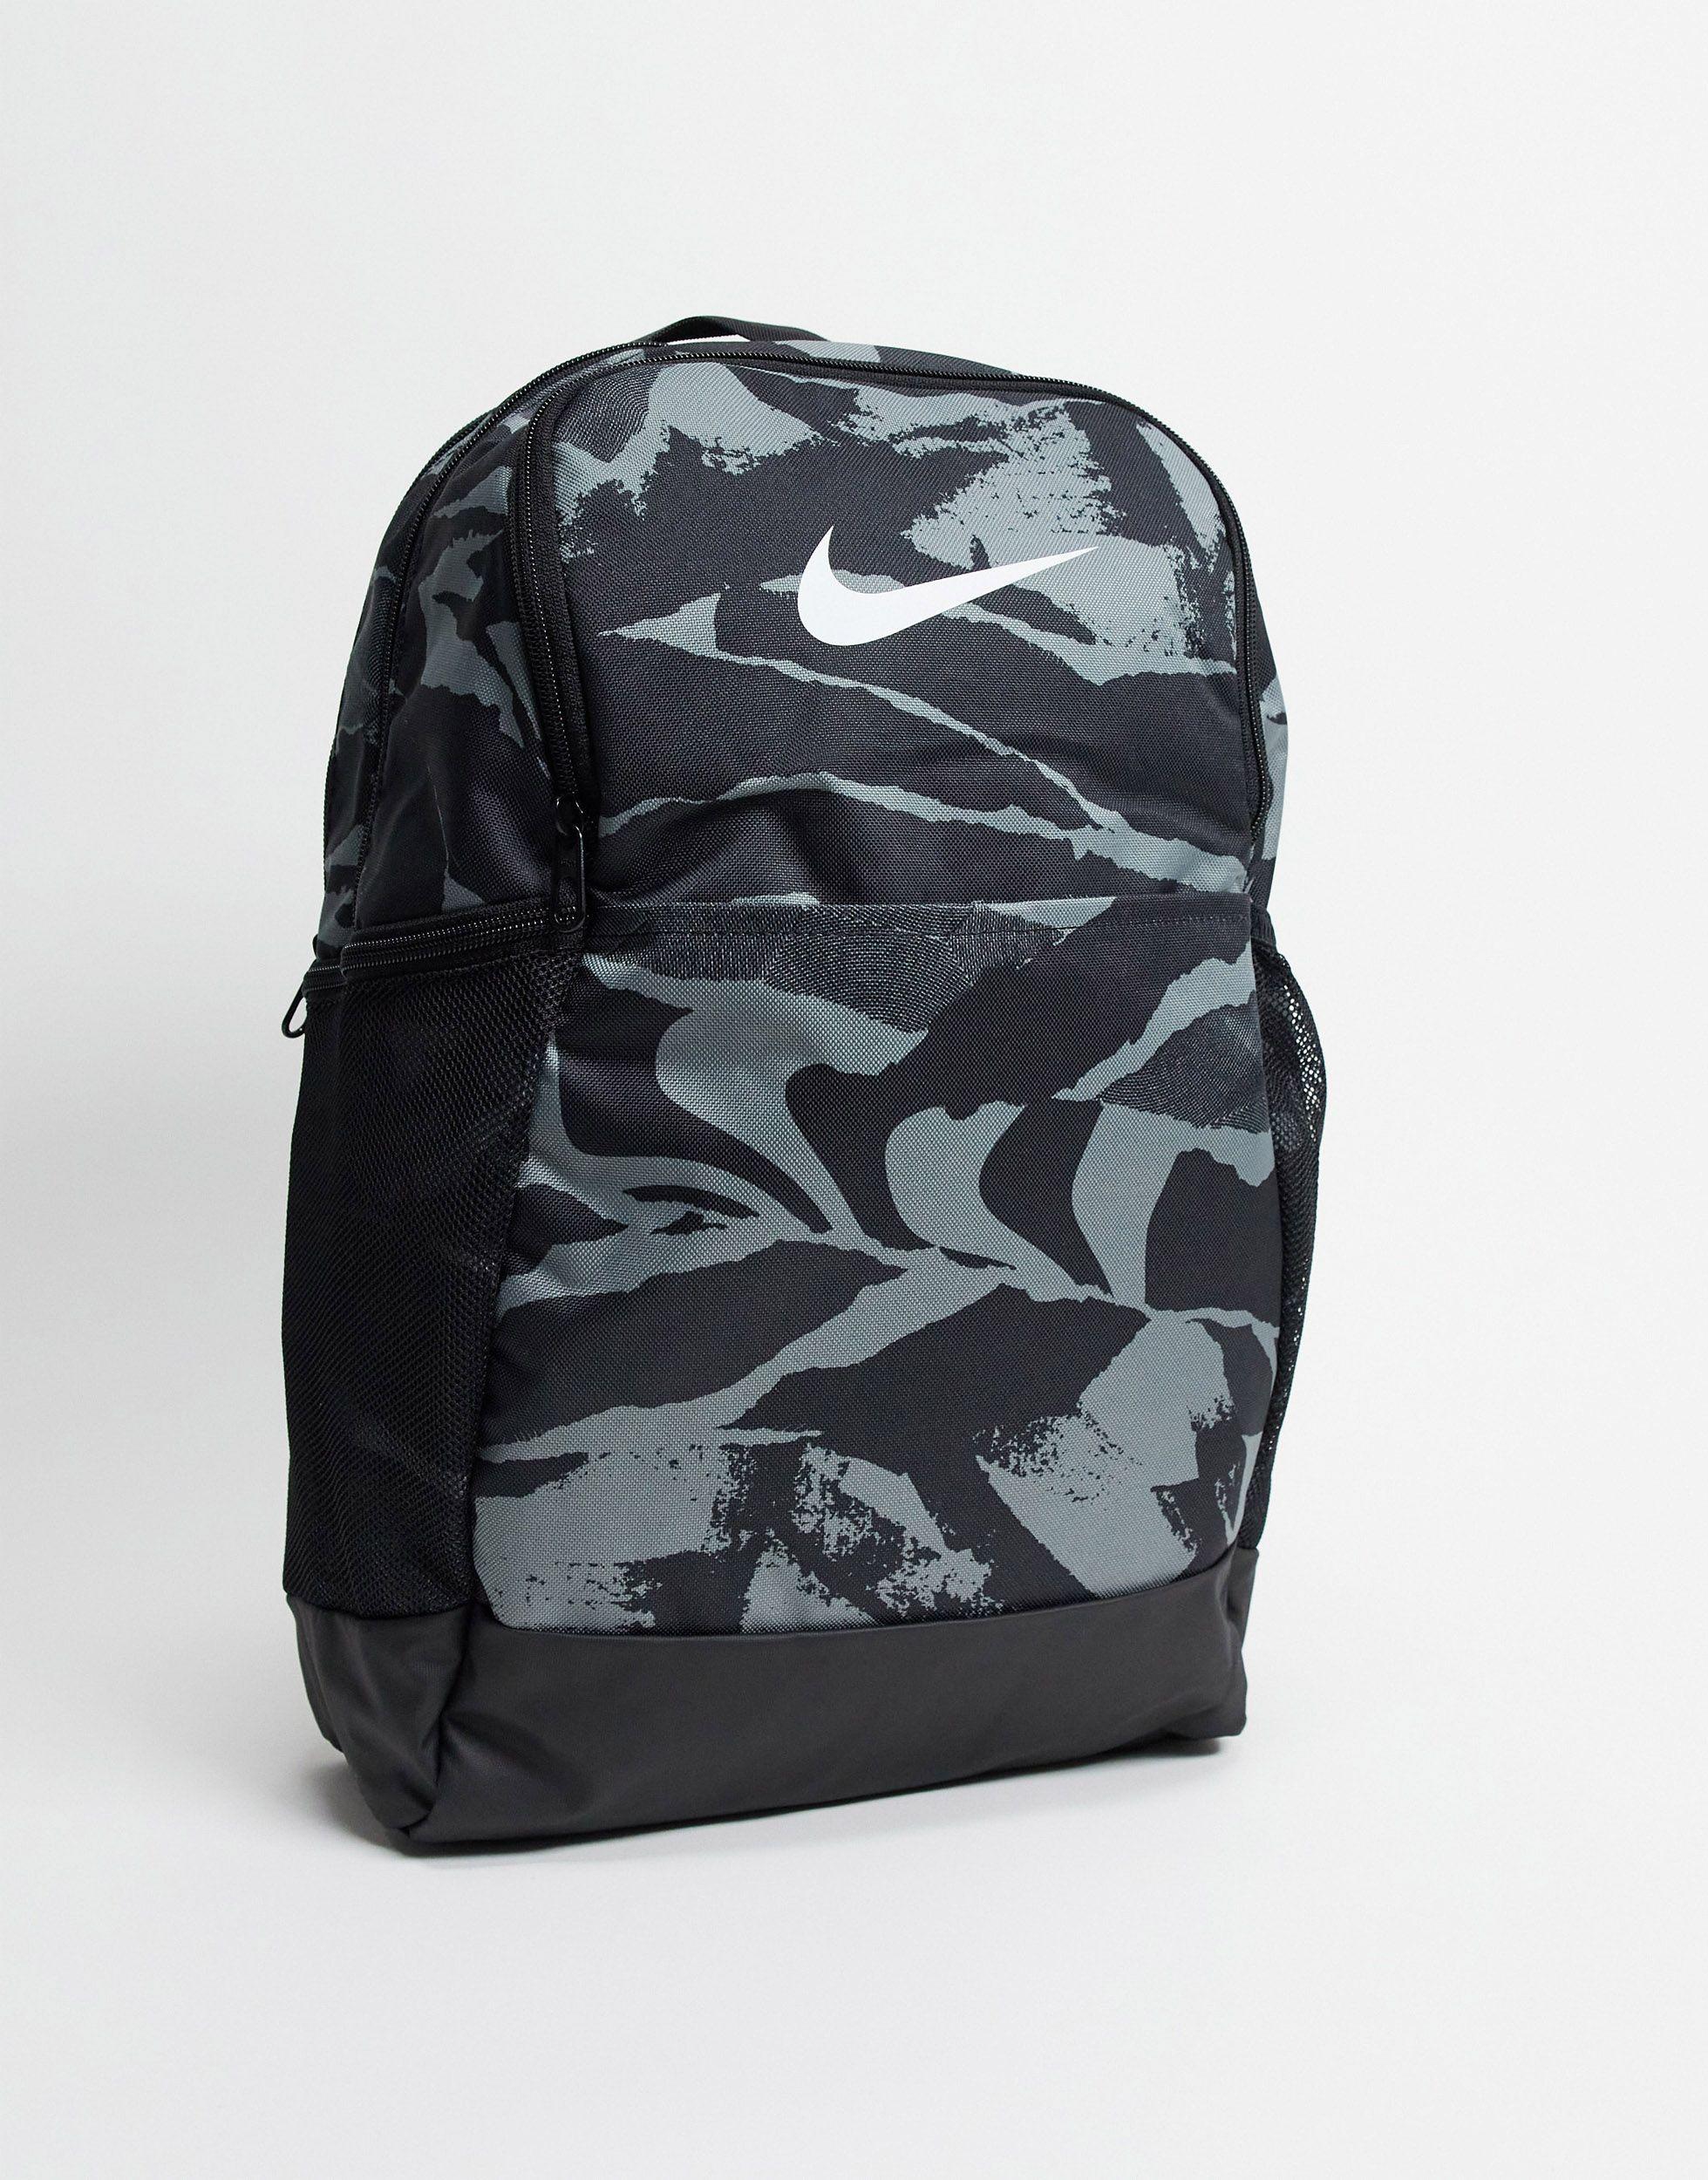 Nike Camo Backpack in Black for Men - Lyst